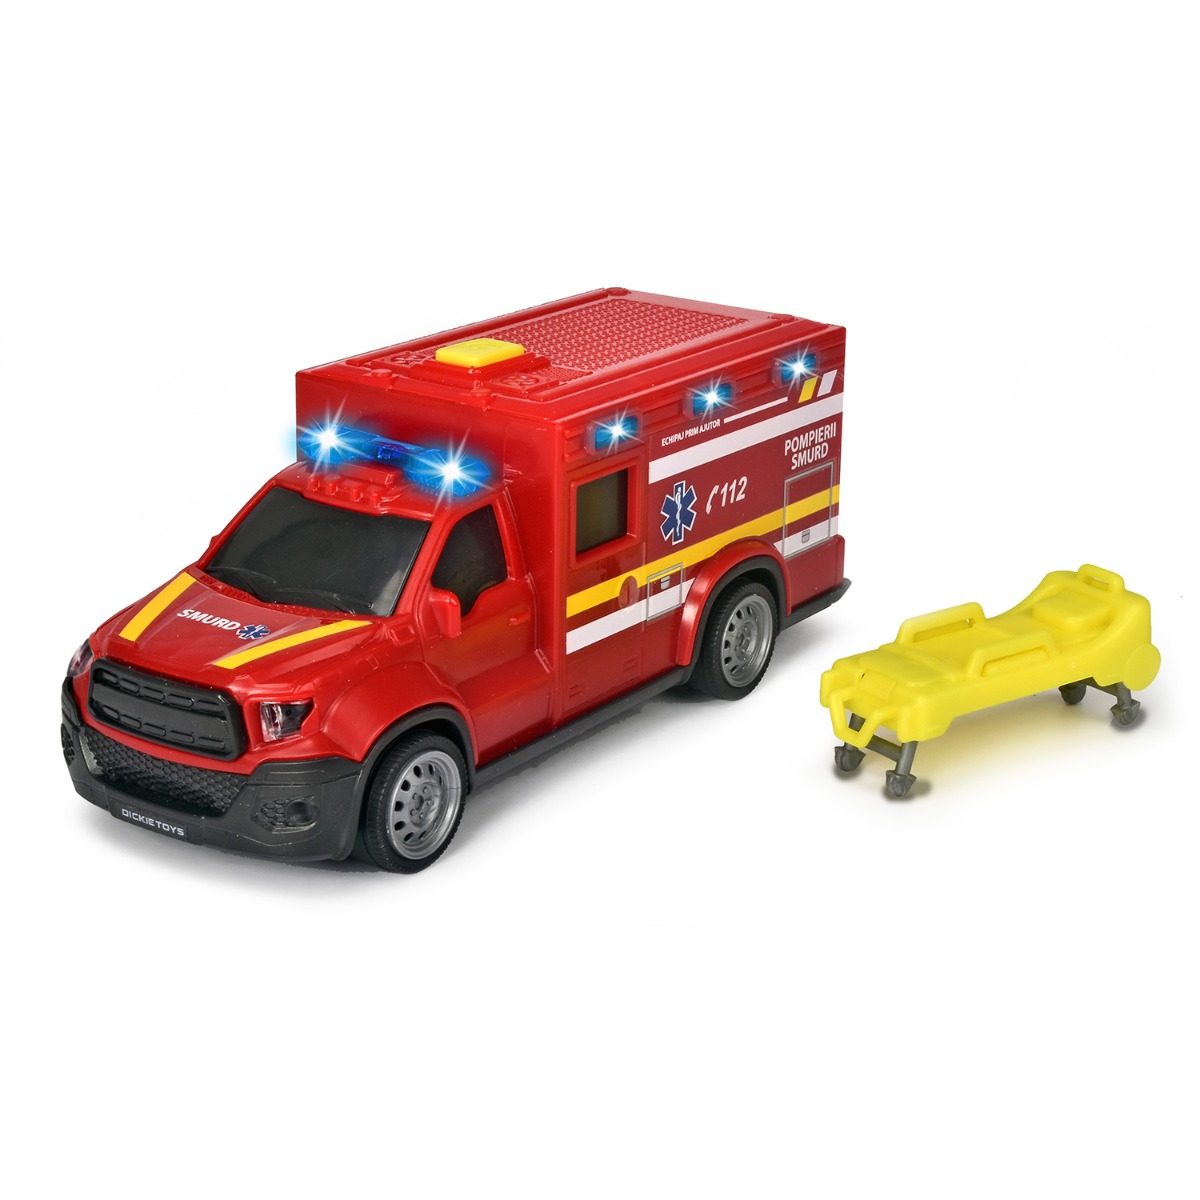 Masinuta de ambulanta Pompierii Smurd Dickie Toys, 1:32 132 imagine 2022 protejamcopilaria.ro